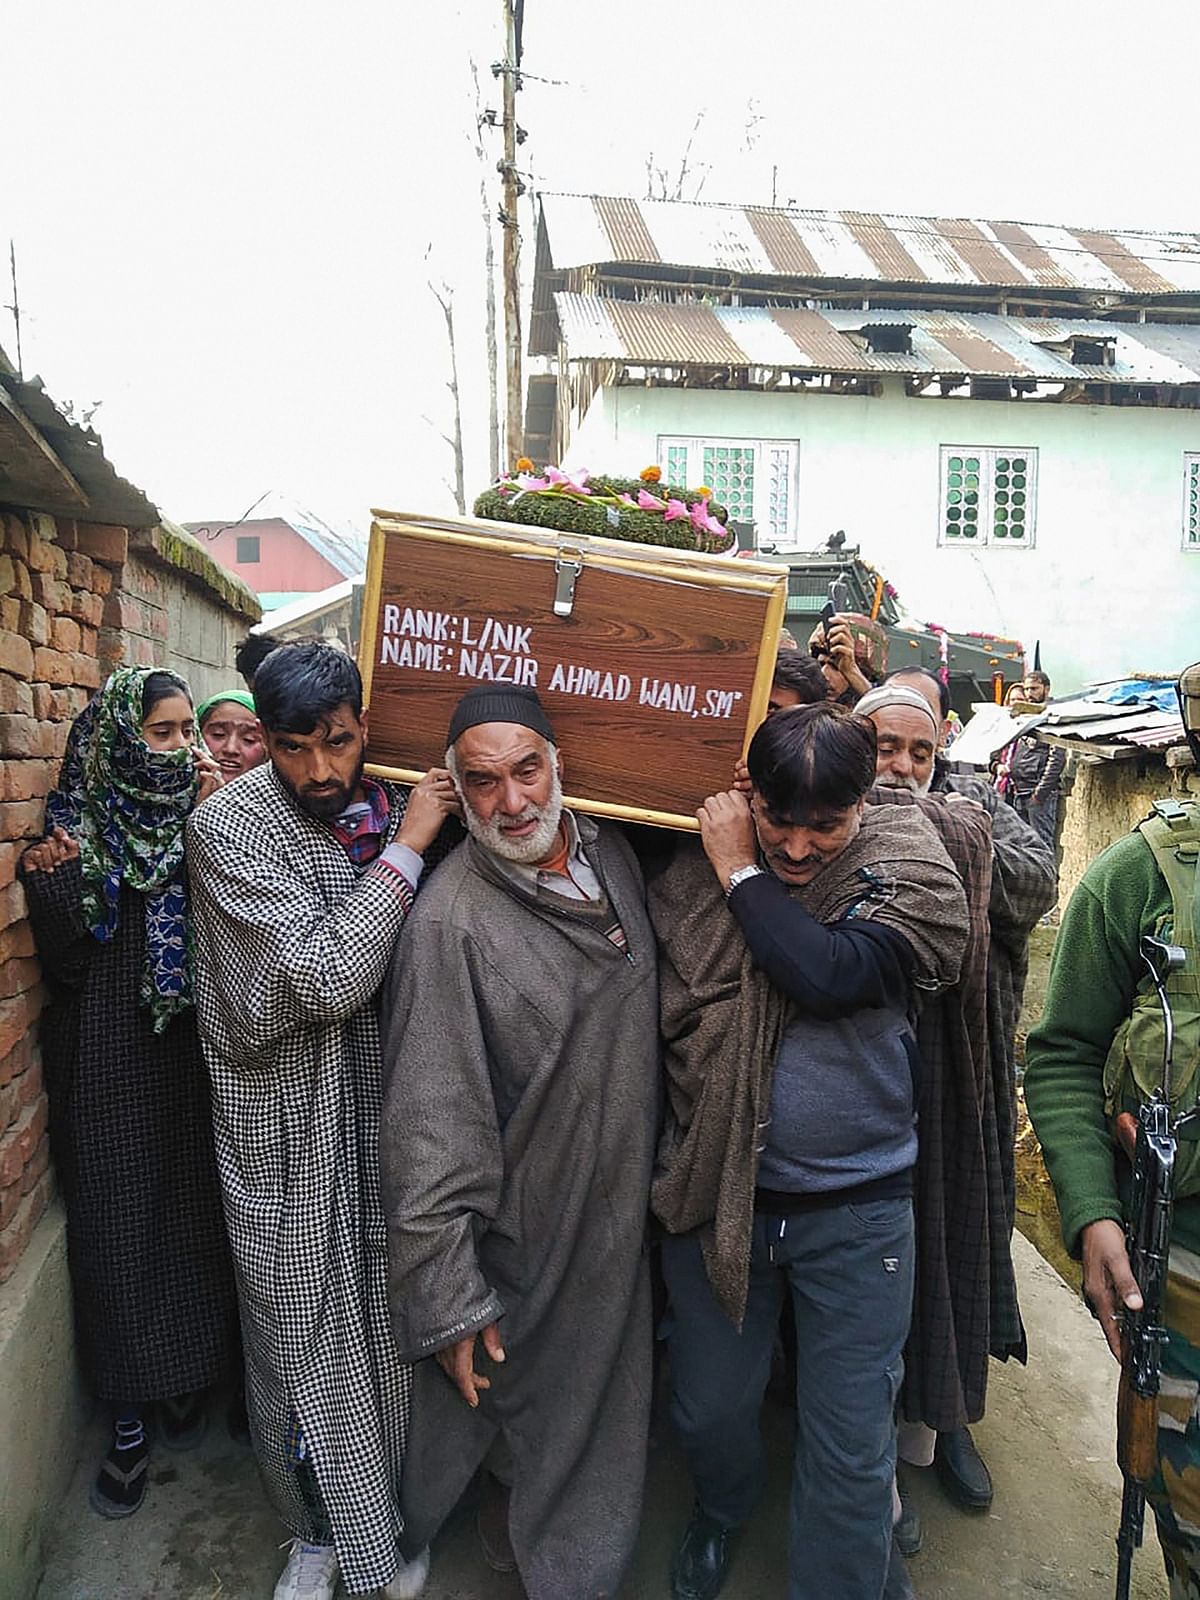 Lance Naik Nazir Ahmed Wani, 38, died during an encounter in South Kashmir’s Shopian district.